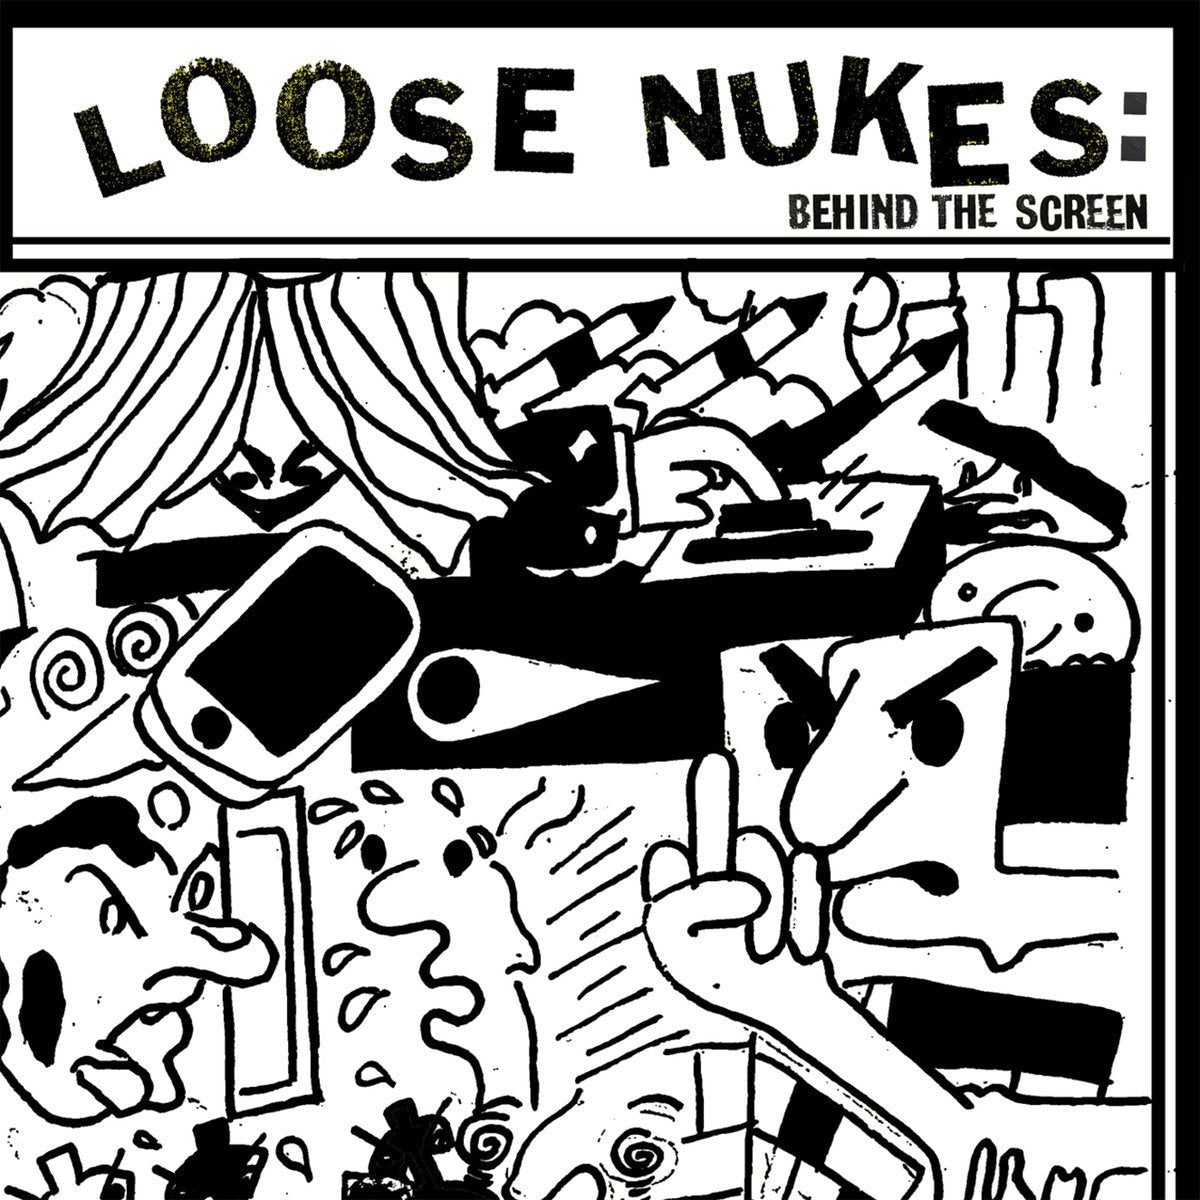 Loose Nukes - Behind The Screen 7" - Vinyl - Beach Impediment